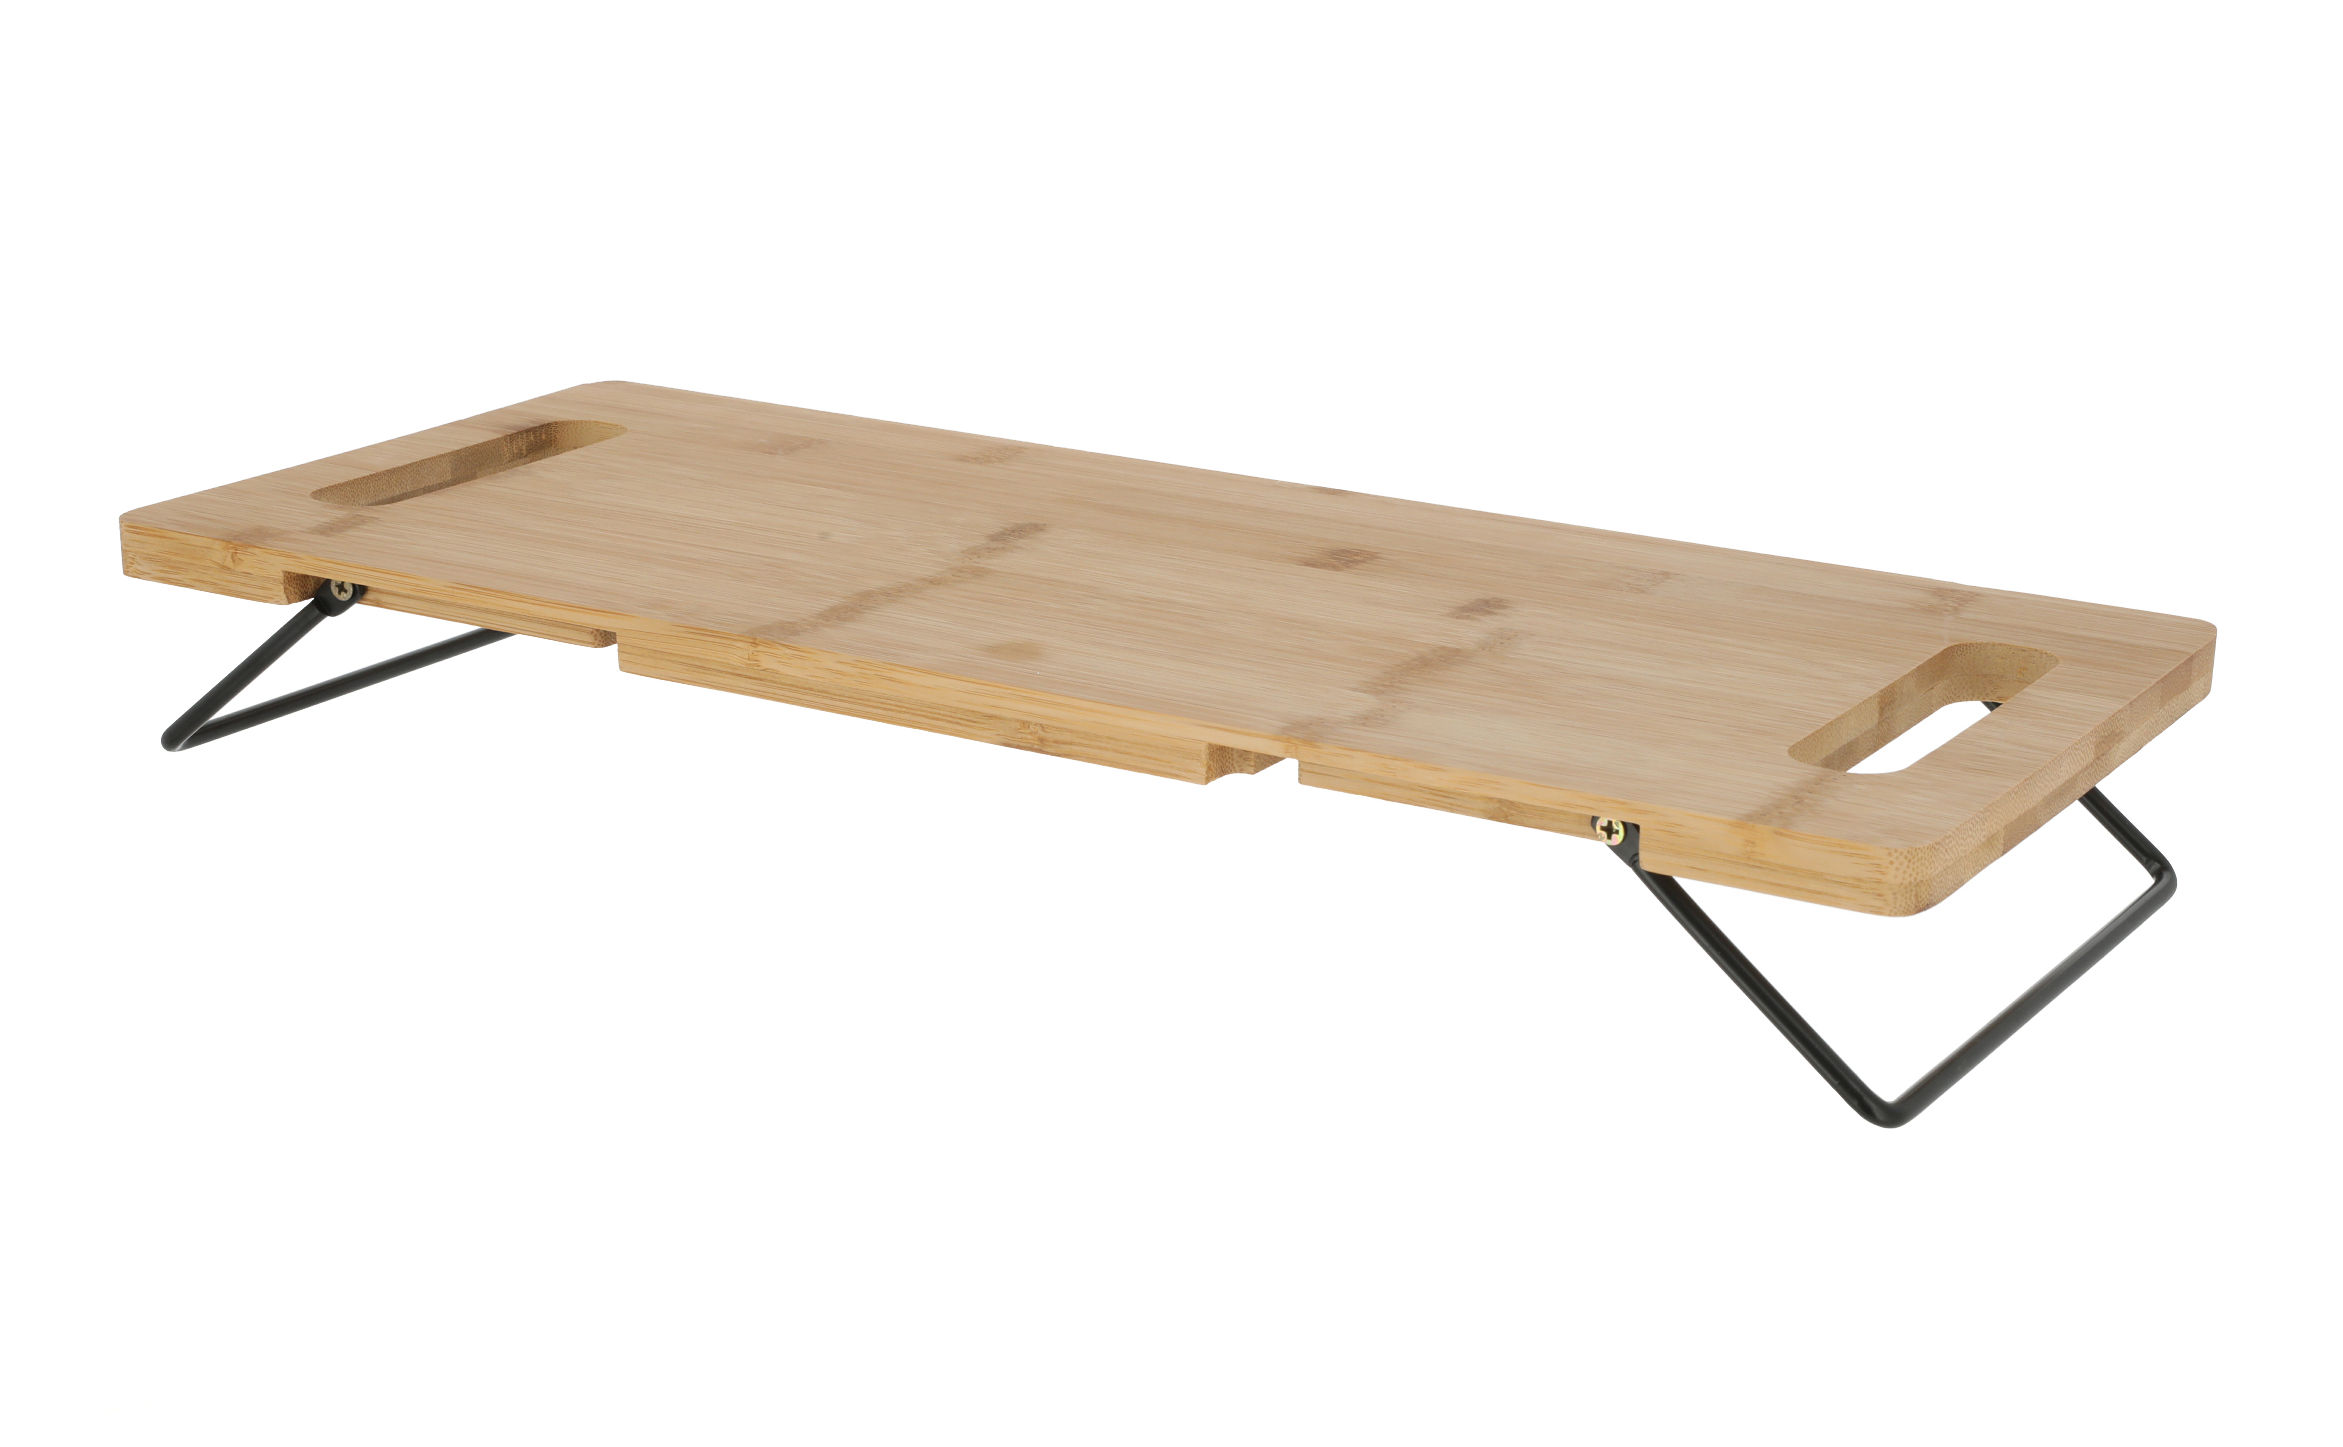 Faltbares Bambus Tablett - ca. 48x20x7 cm - Bett Tablett mit Füßen